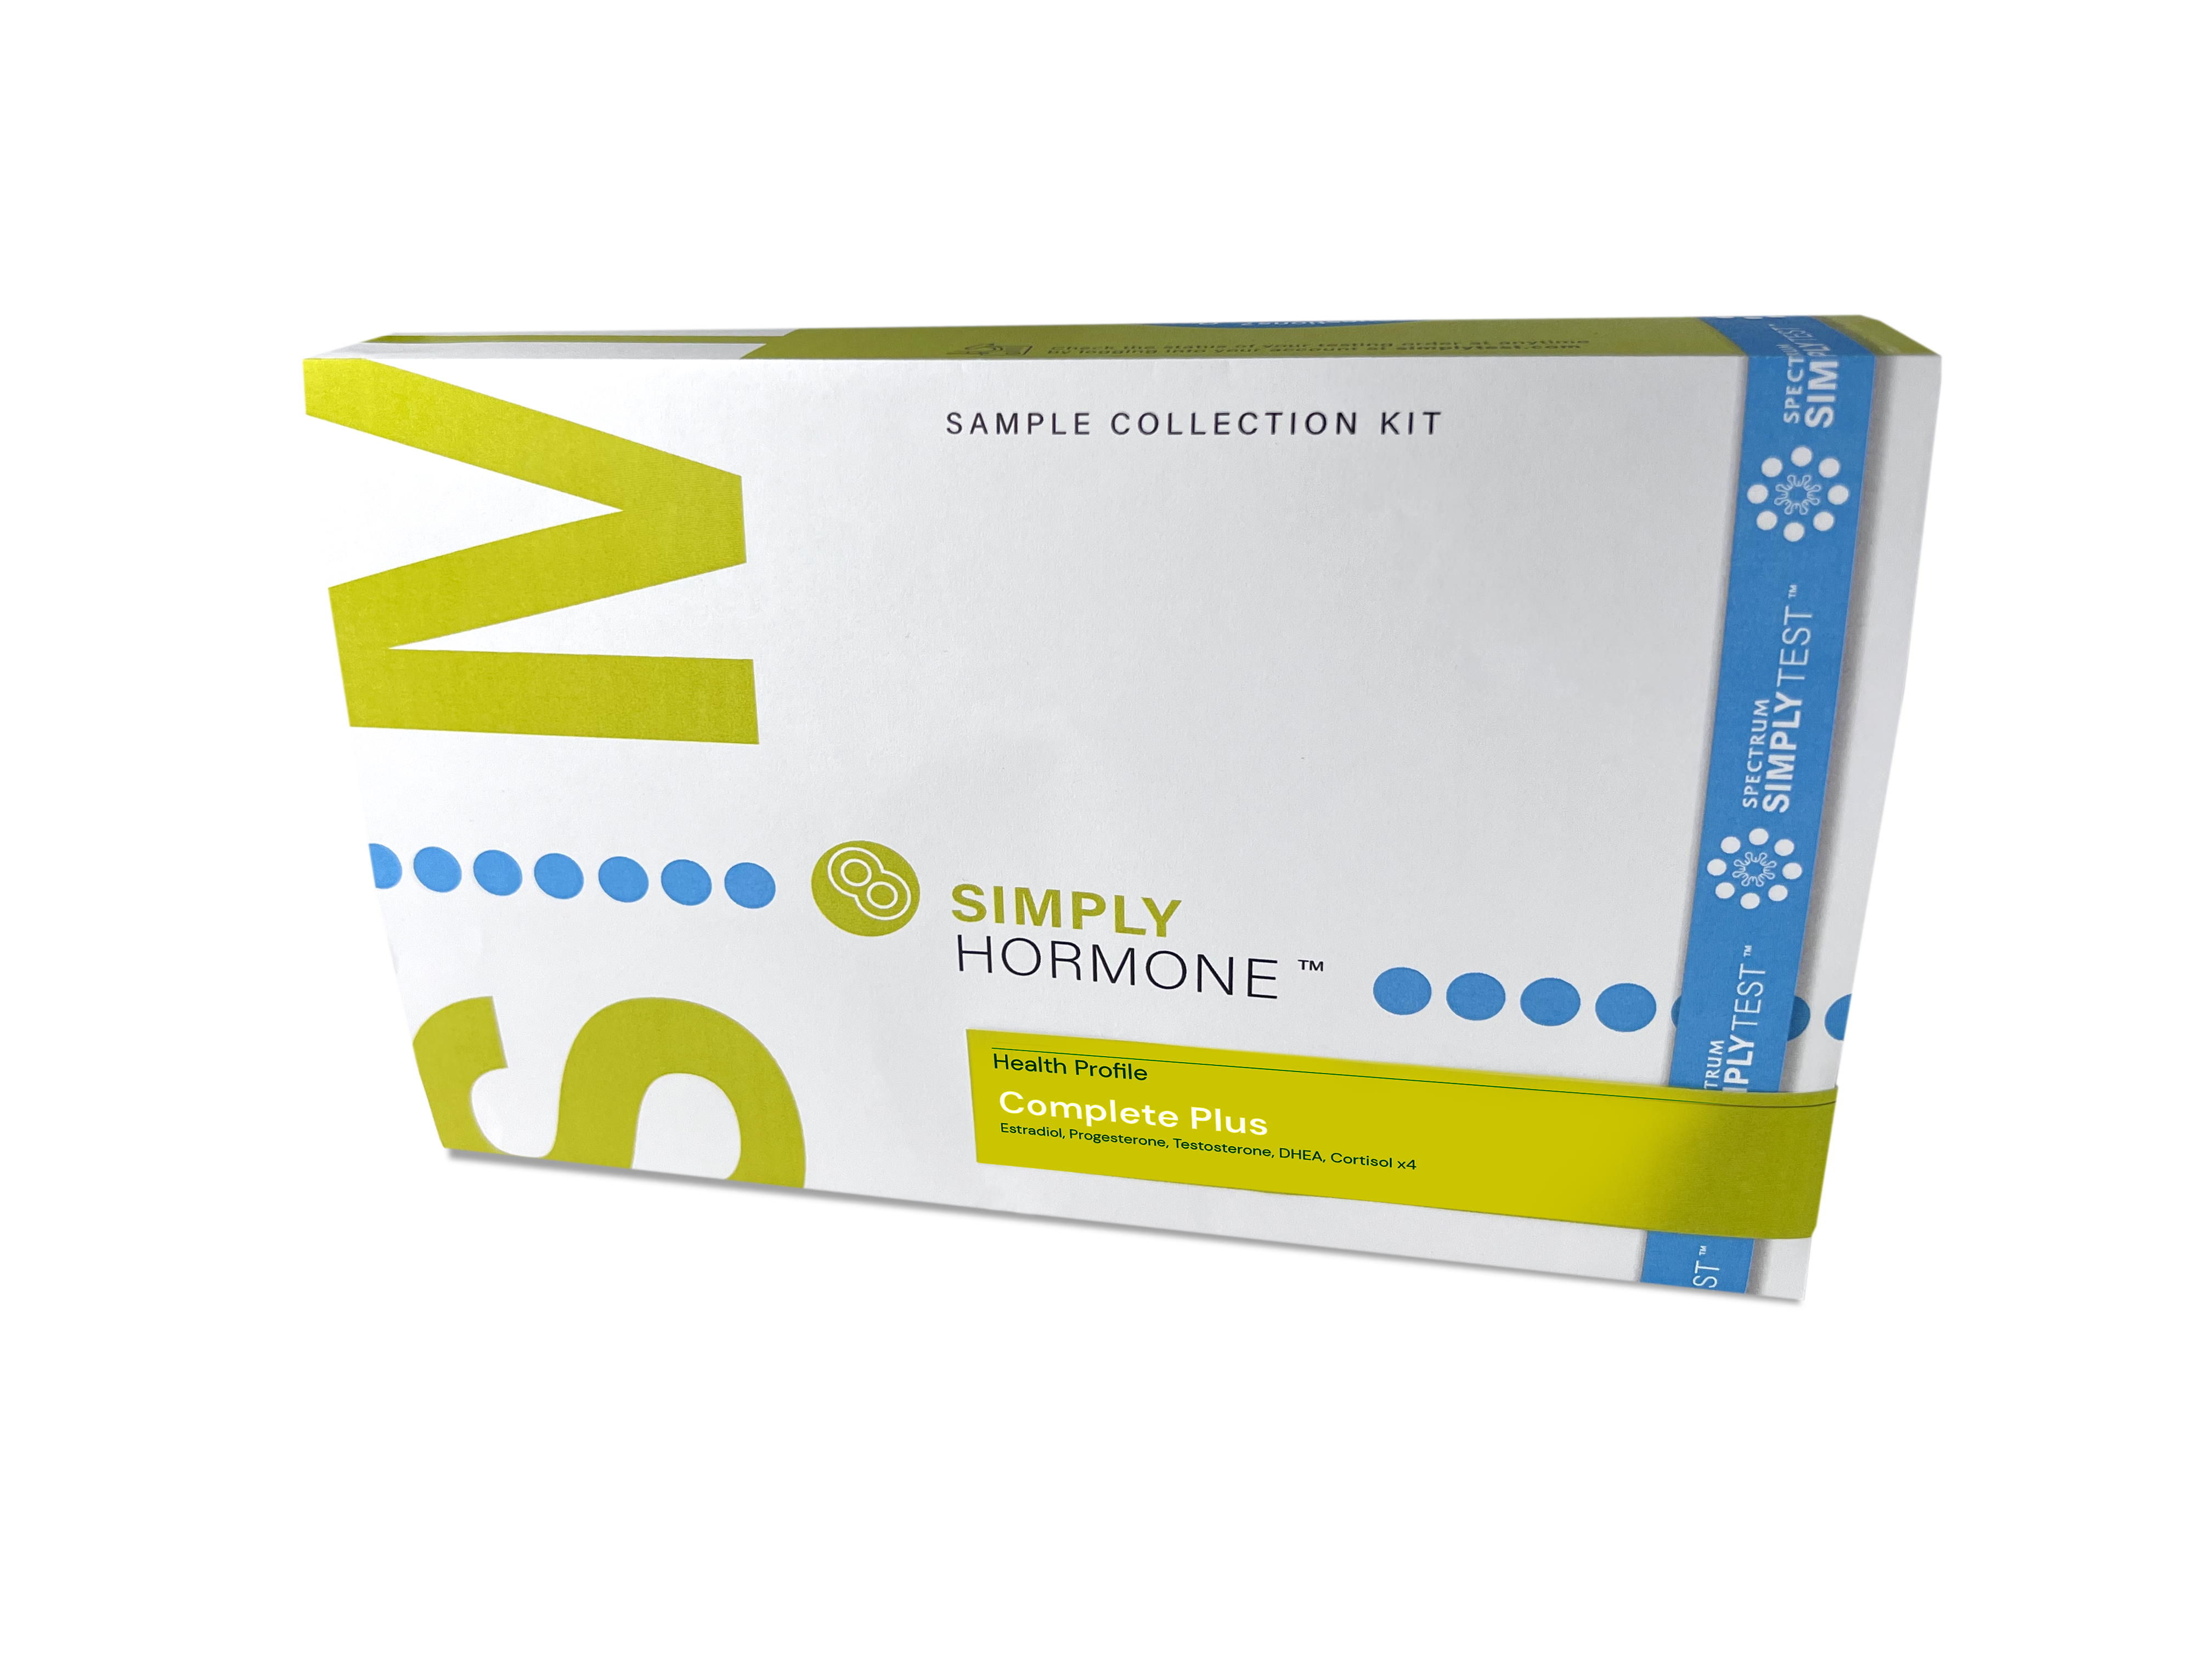 Simply Hormone Complete Plus Test Kit